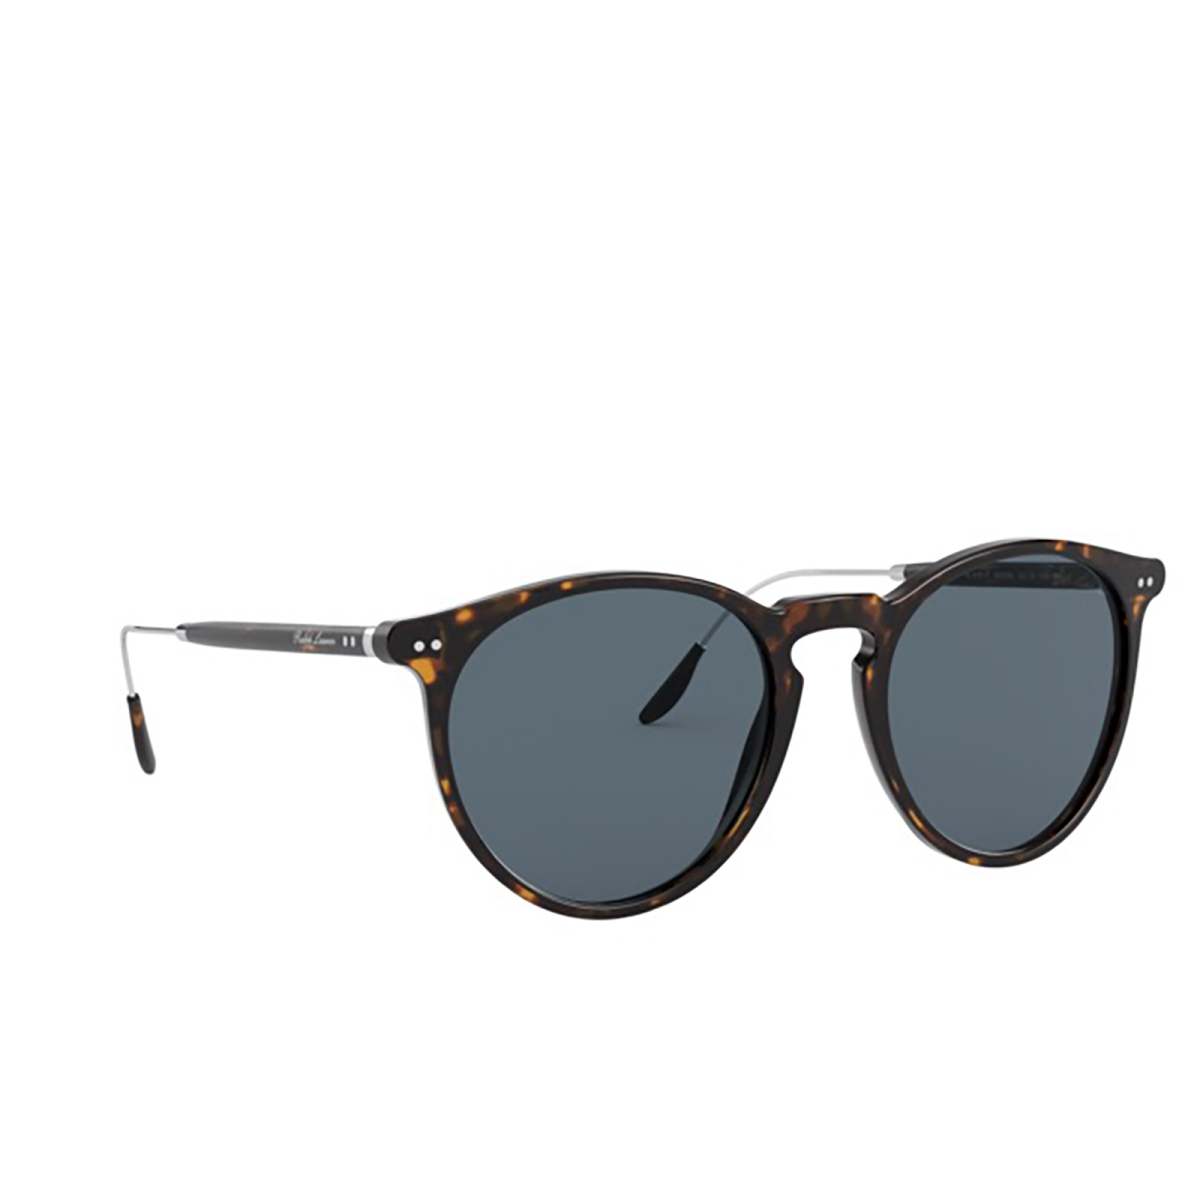 Ralph Lauren® Round Sunglasses: RL8181P color Shiny Dark Havana 5003R5 - three-quarters view.